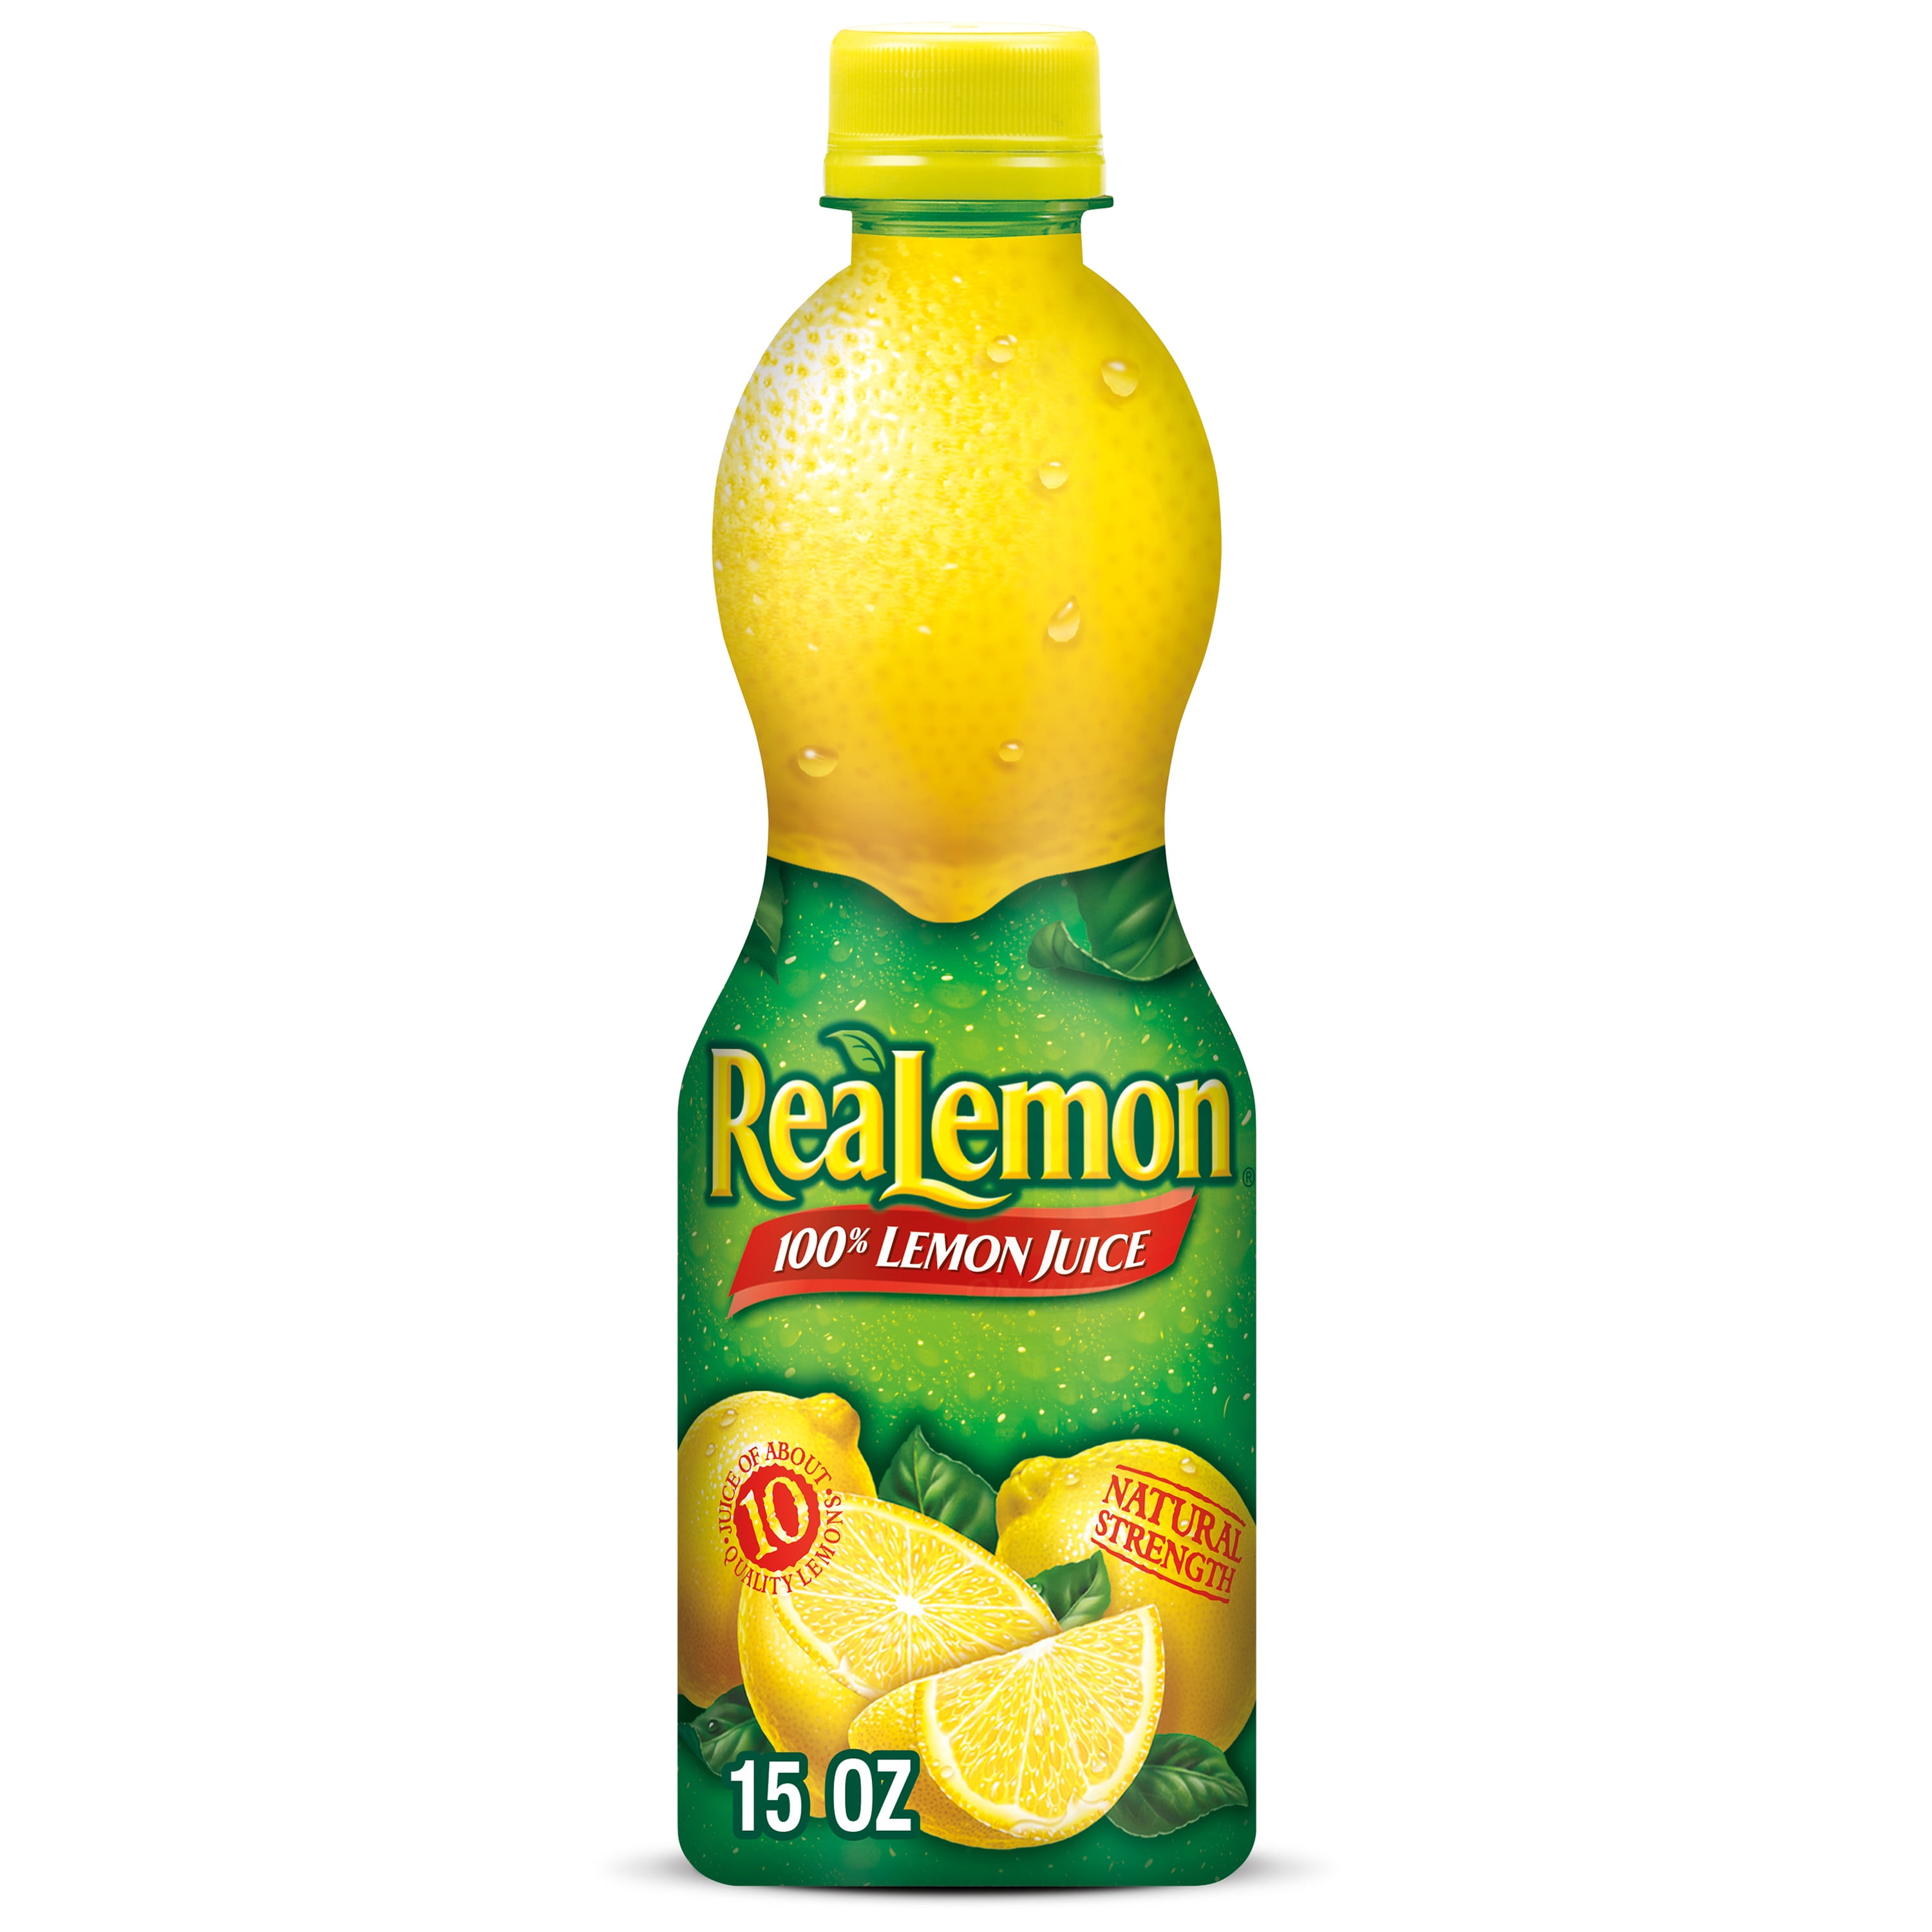 ReaLemon 100% Lemon Juice, 15 Fl Oz Bottle, 1 Count - Walmart.com